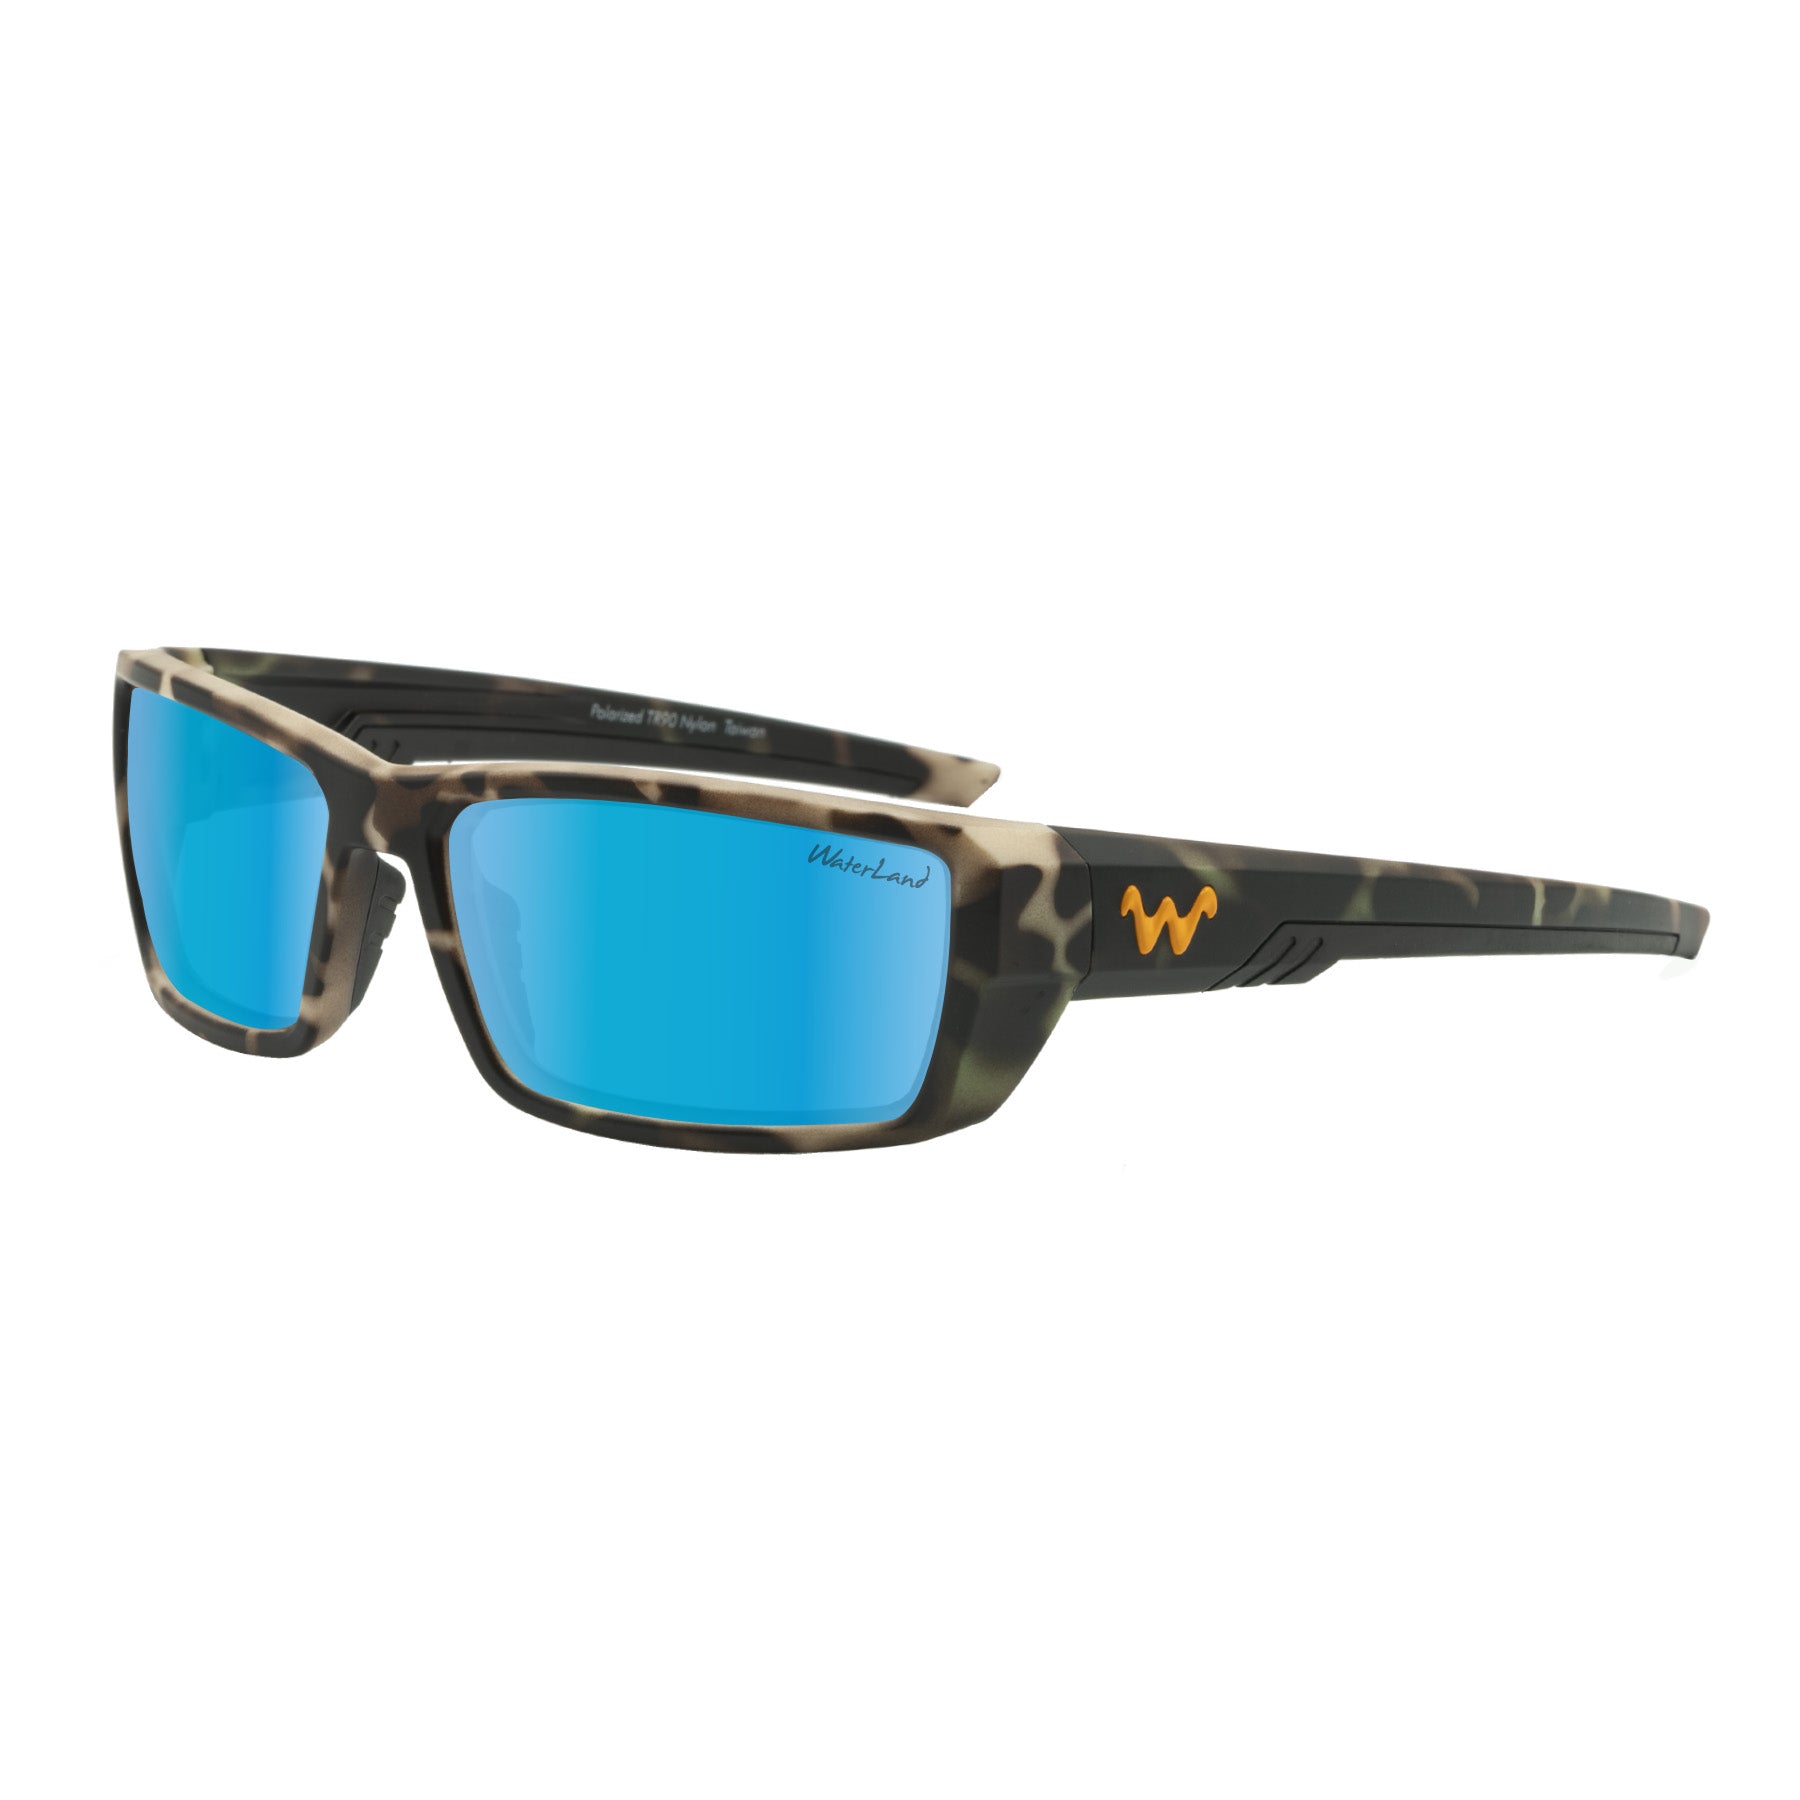 WaterLand Polarized Sunglasses - Ashor Series - BlackWater